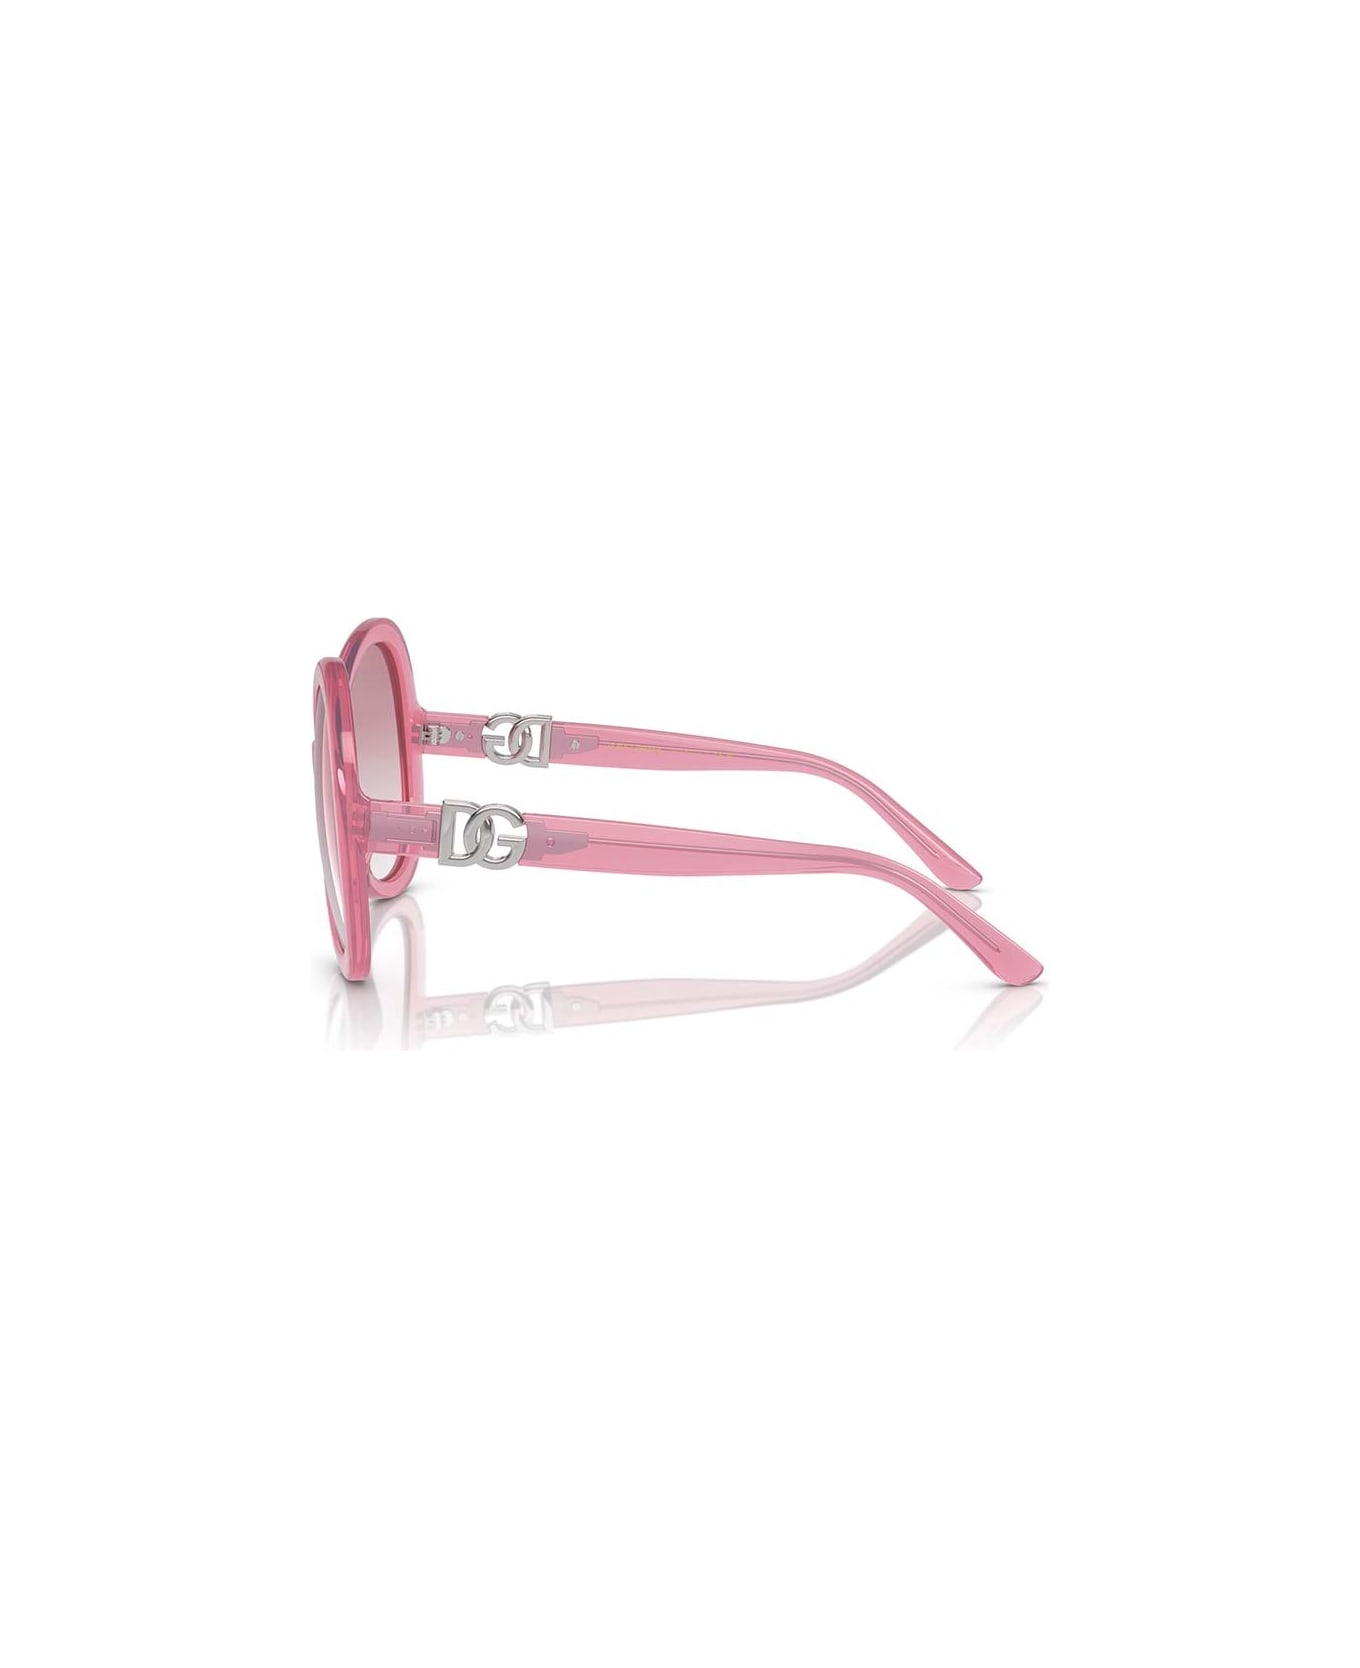 Dolce & Gabbana Eyewear Sunglasses - Rosa/Rosa sfumato サングラス